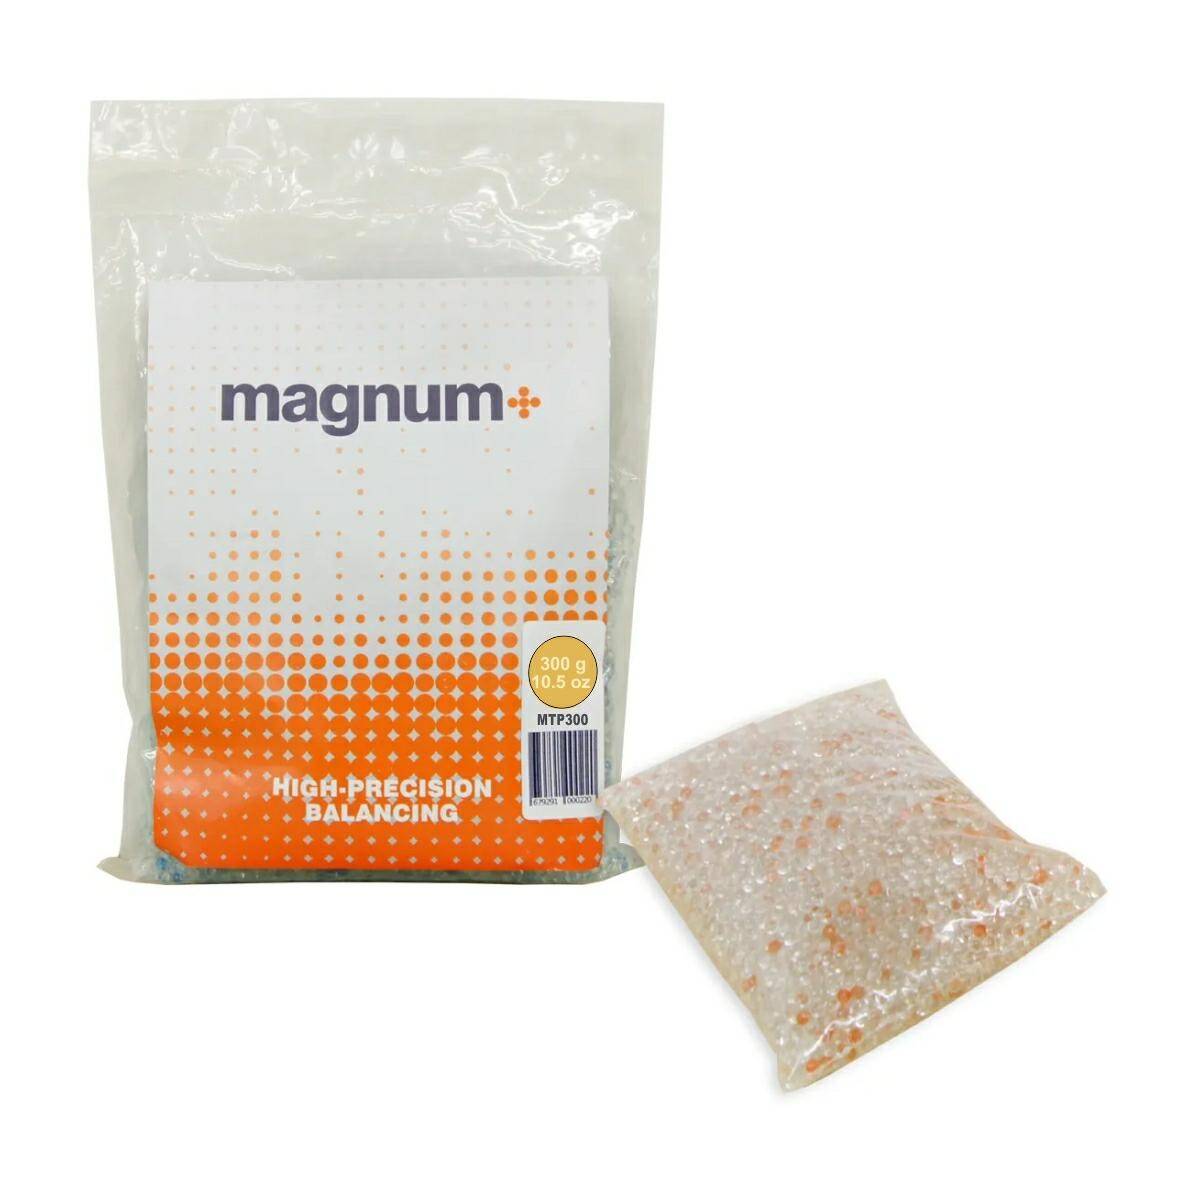 Magnum Plus Balance Powder 300 g (T-LTP300)